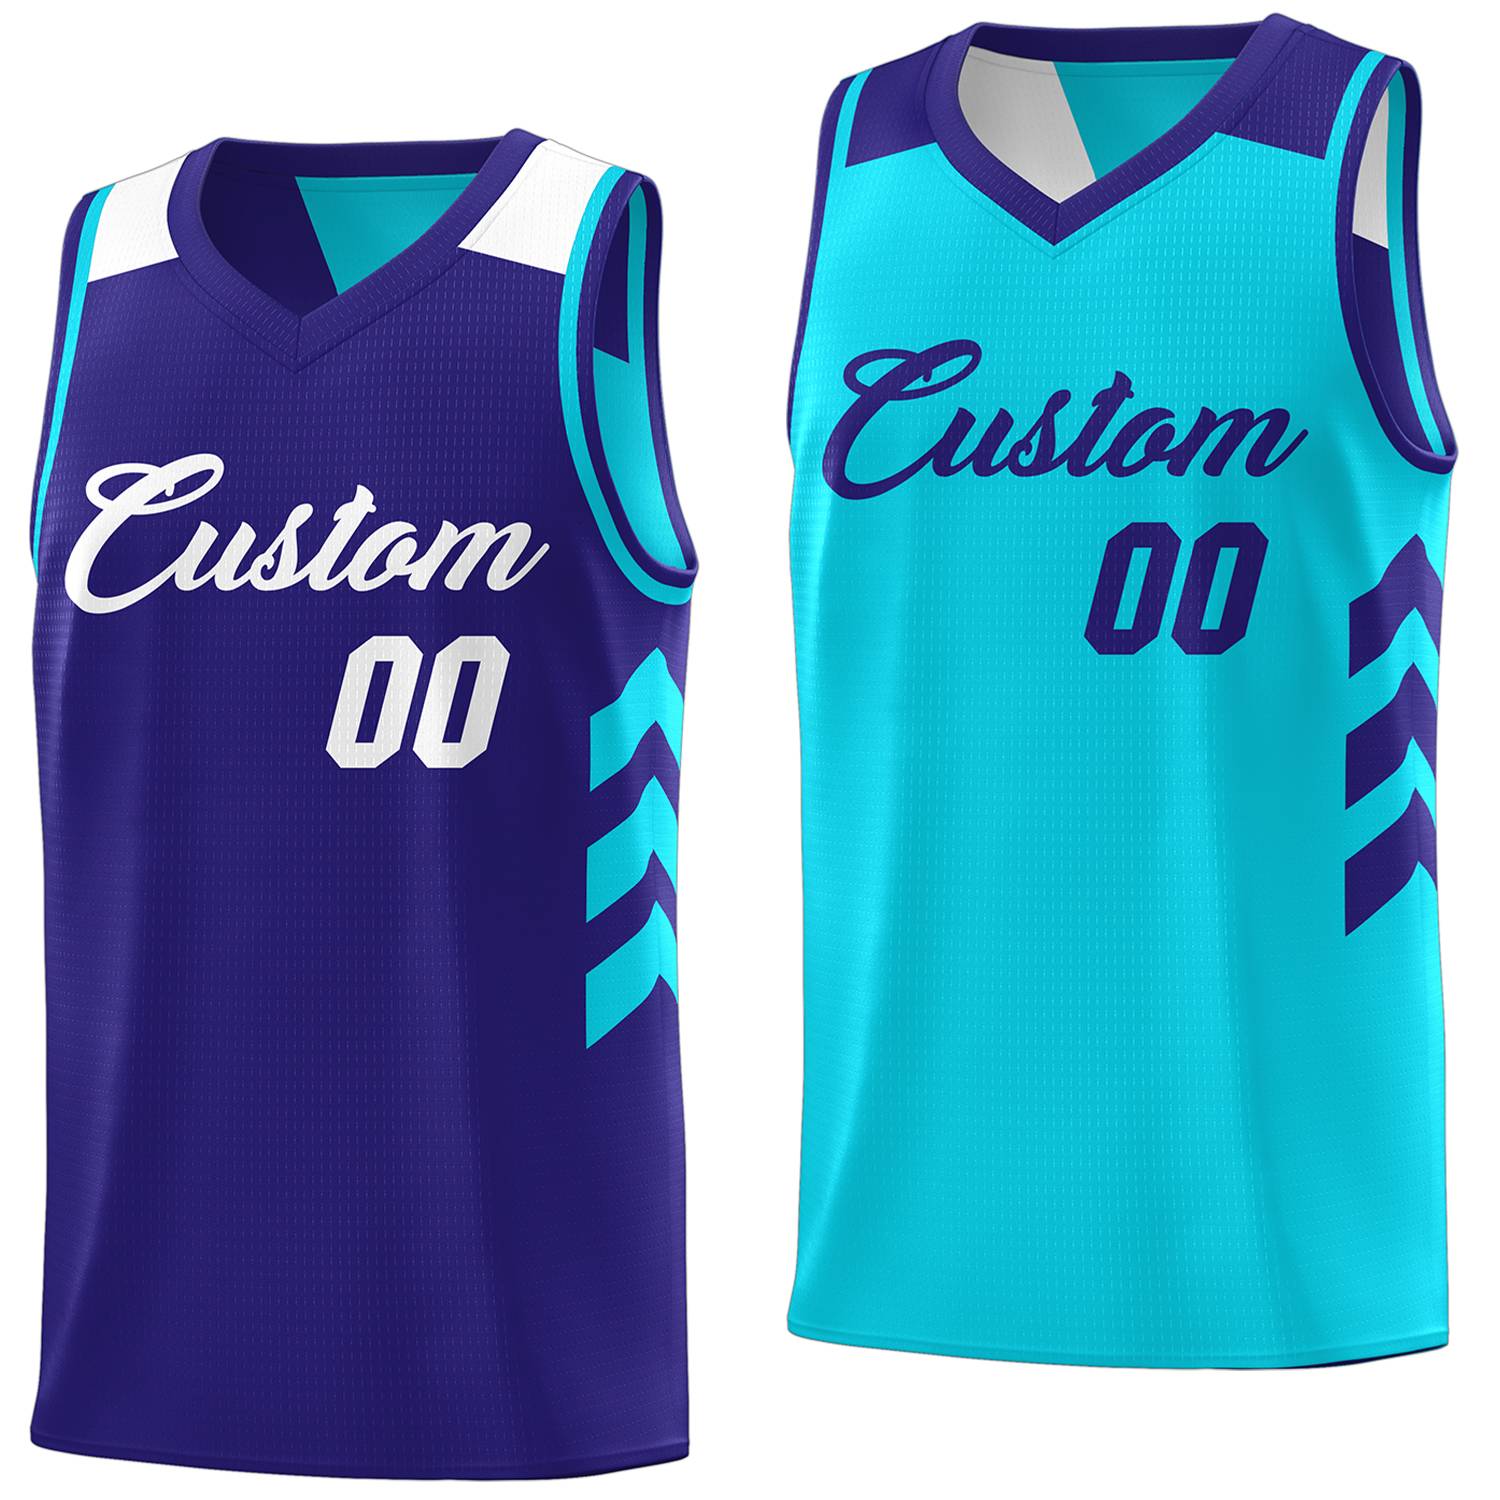 royal and teal custom reversible basketball jerseys